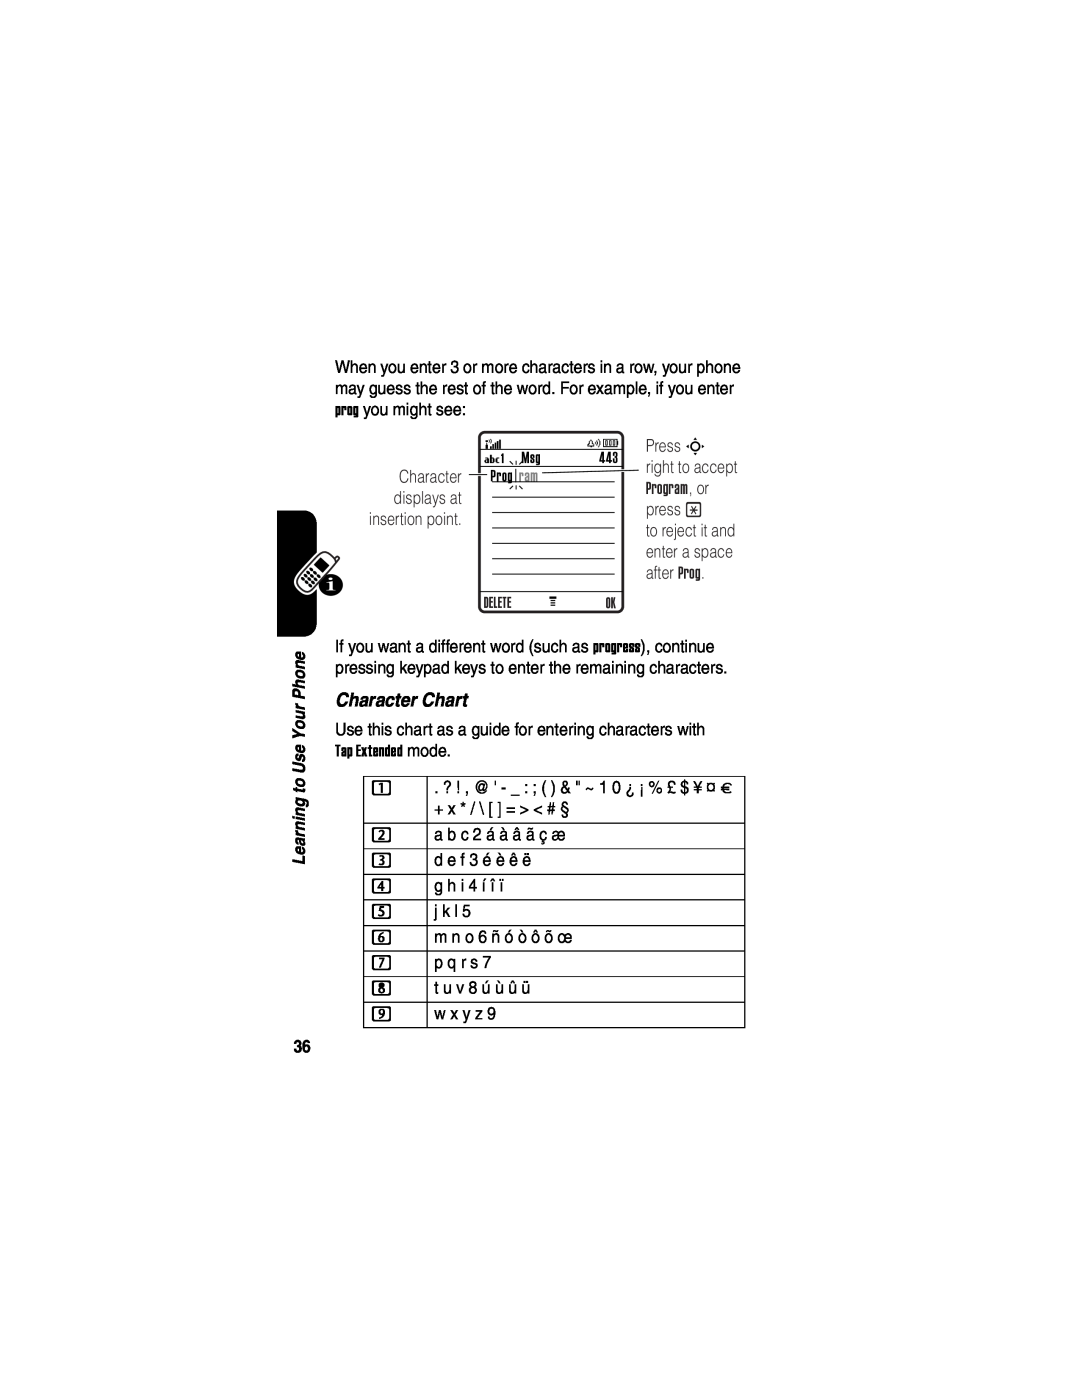 Motorola V551SLVATT manual Character Chart, displays at 